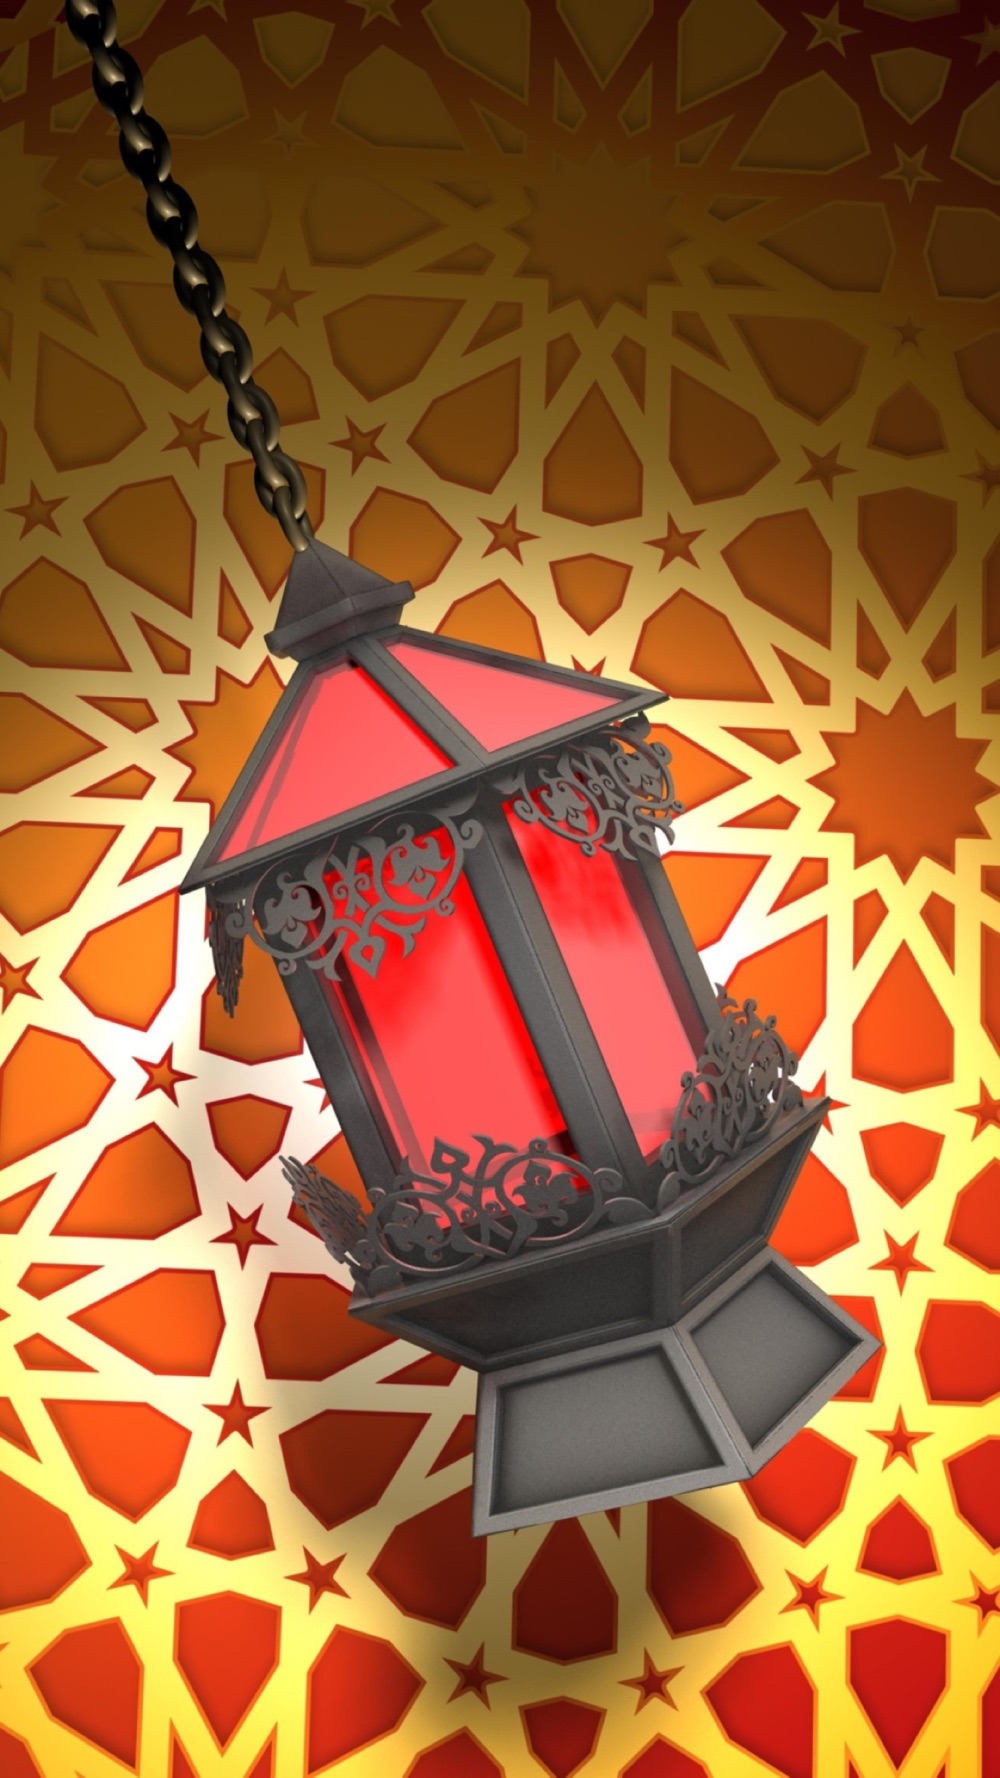 Islamic wallpaper quran, mecca, ramadan pics Free Download App for iPhone